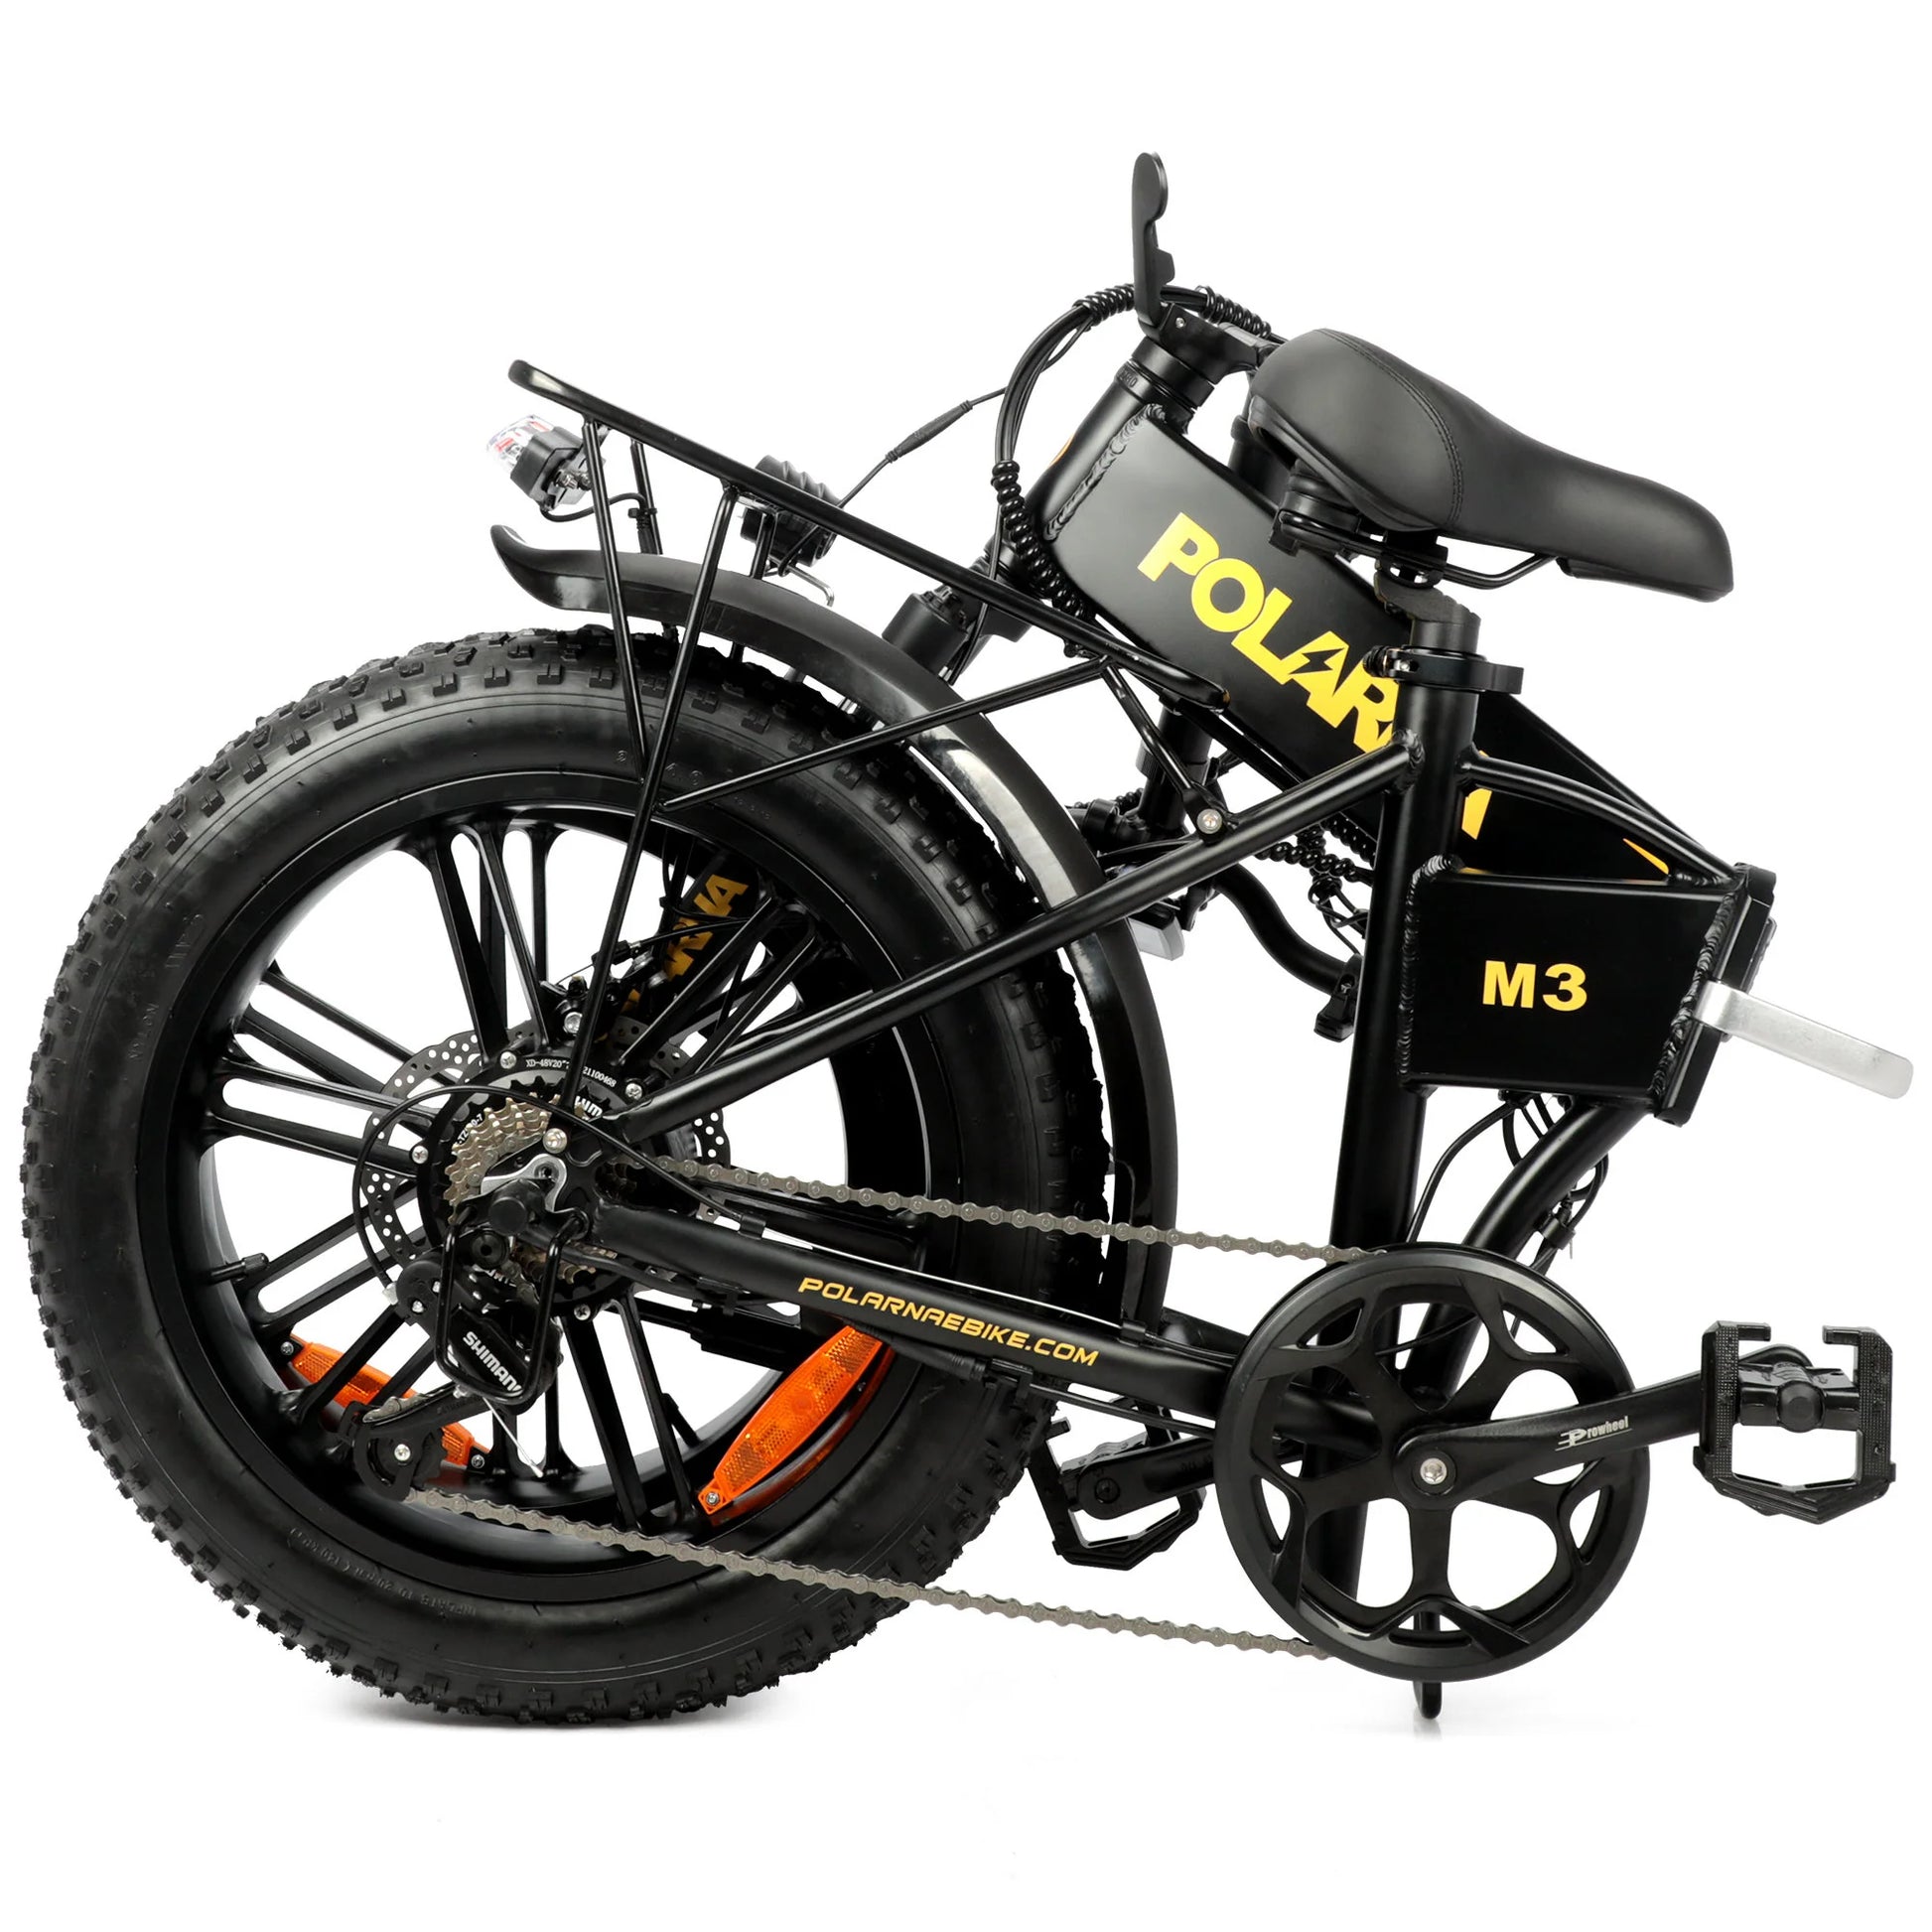 Gosen - Electric Folding Fat Tire Bike - M3 - CHARGED UP FREEDOM